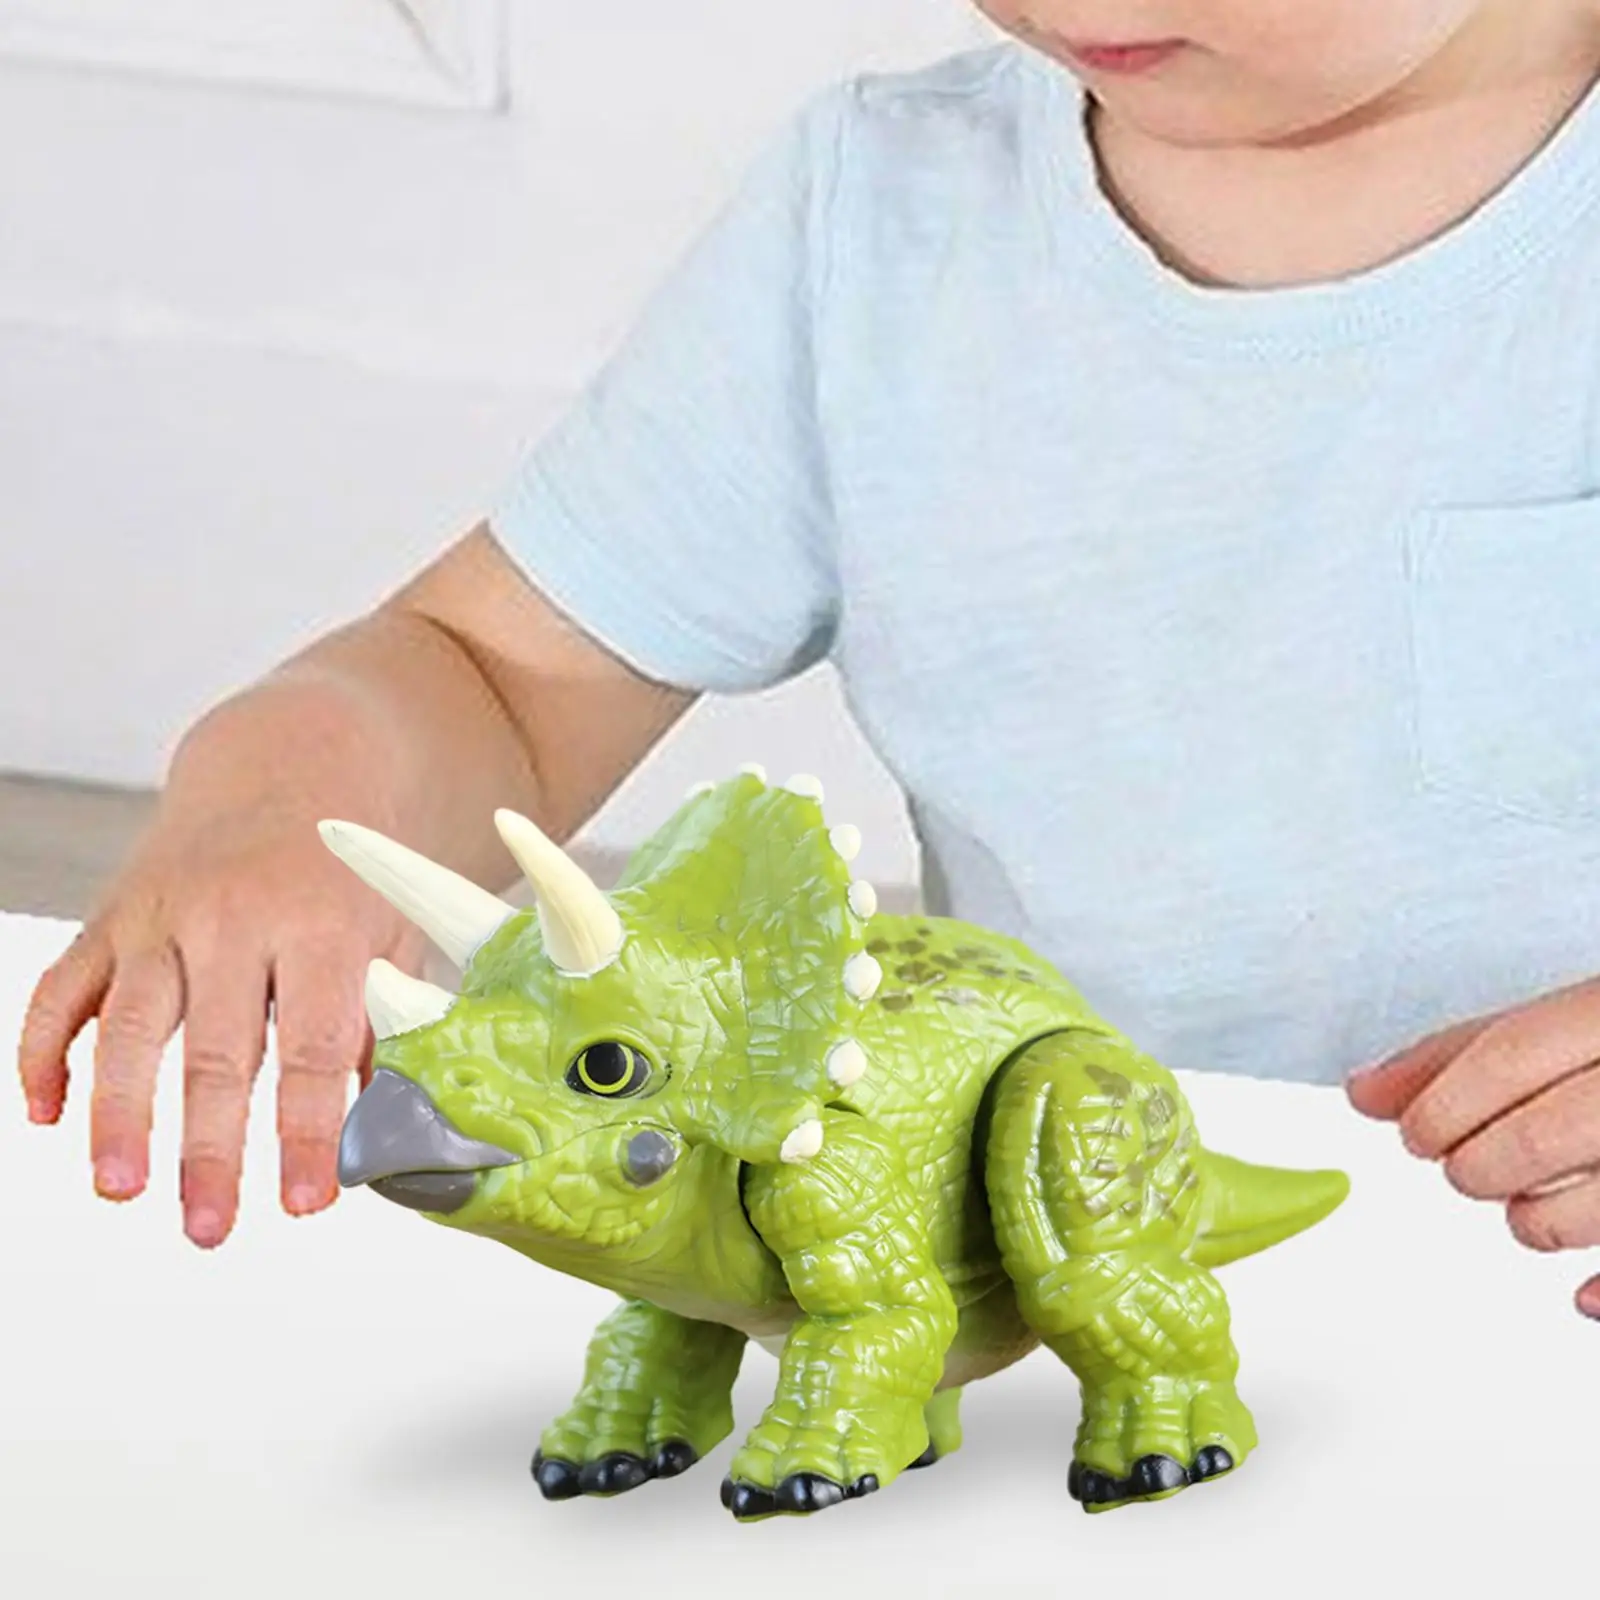 Dinosaur Action Figure Toy Simulation Animal Model for Cars Desktop Travel